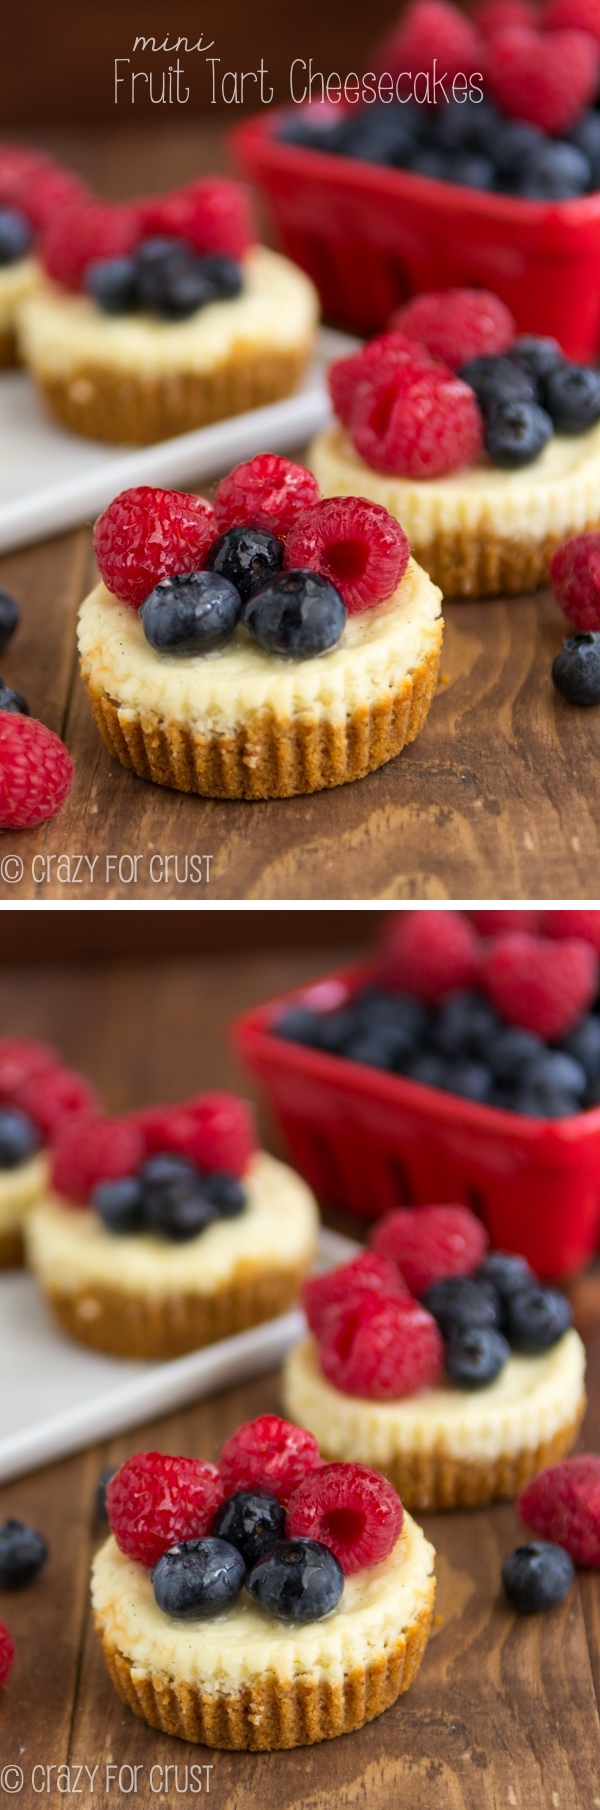 Mini-Fruit-Tart-Cheesecakes